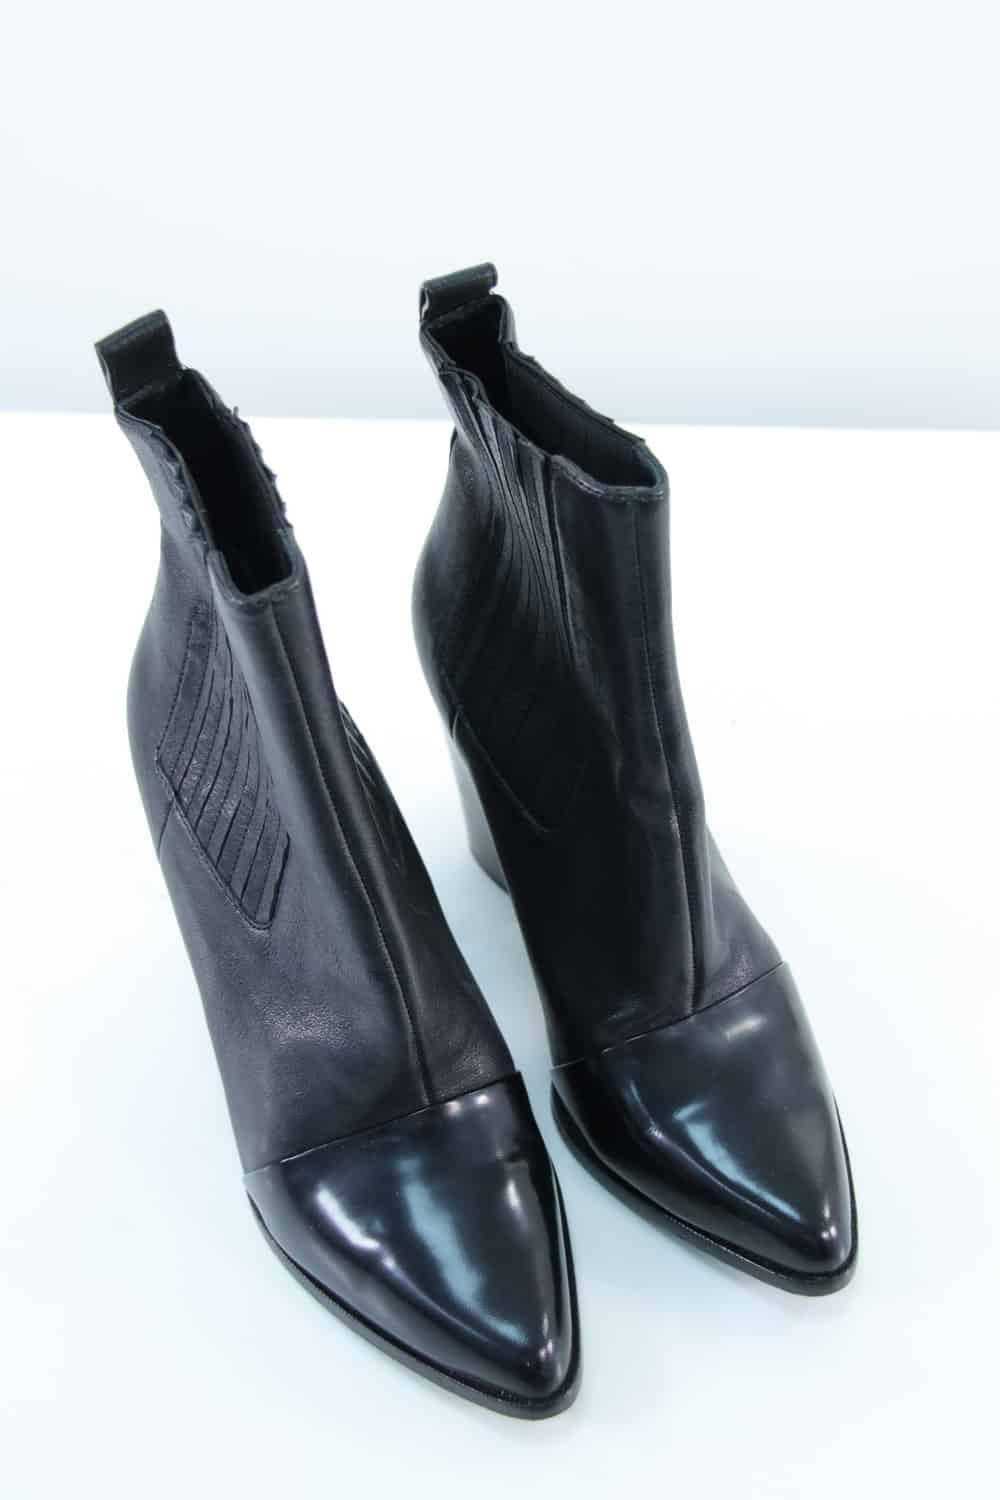 Circular Clothing Boots Kenzo noir cuir. Talon 9.… - image 3